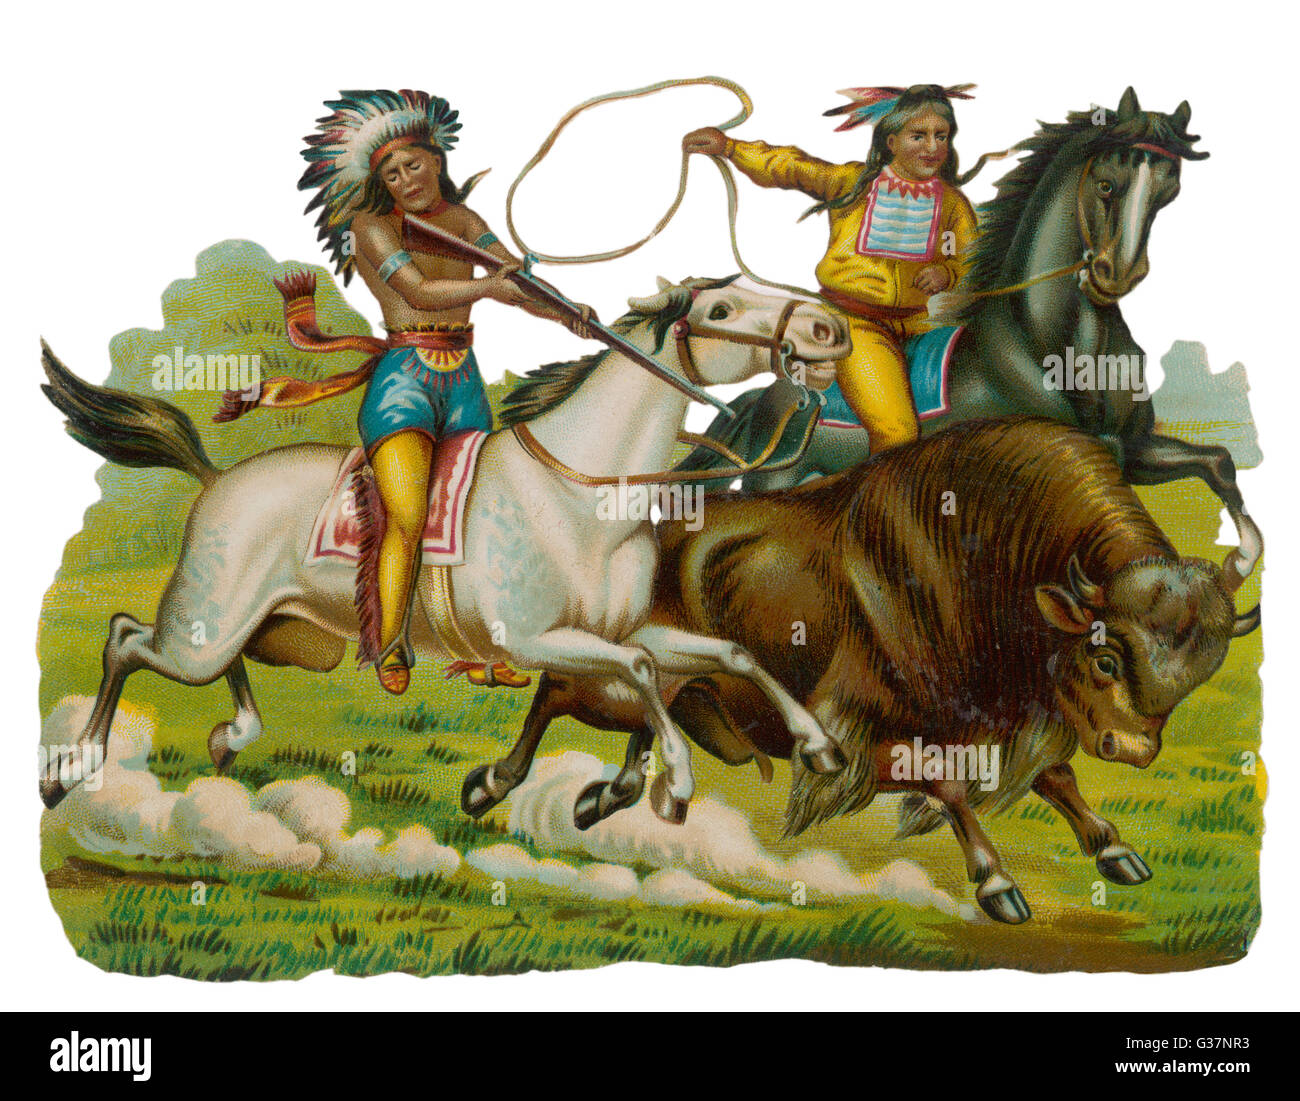 https://c8.alamy.com/comp/G37NR3/native-american-hunting-buffalo-on-horseback-G37NR3.jpg